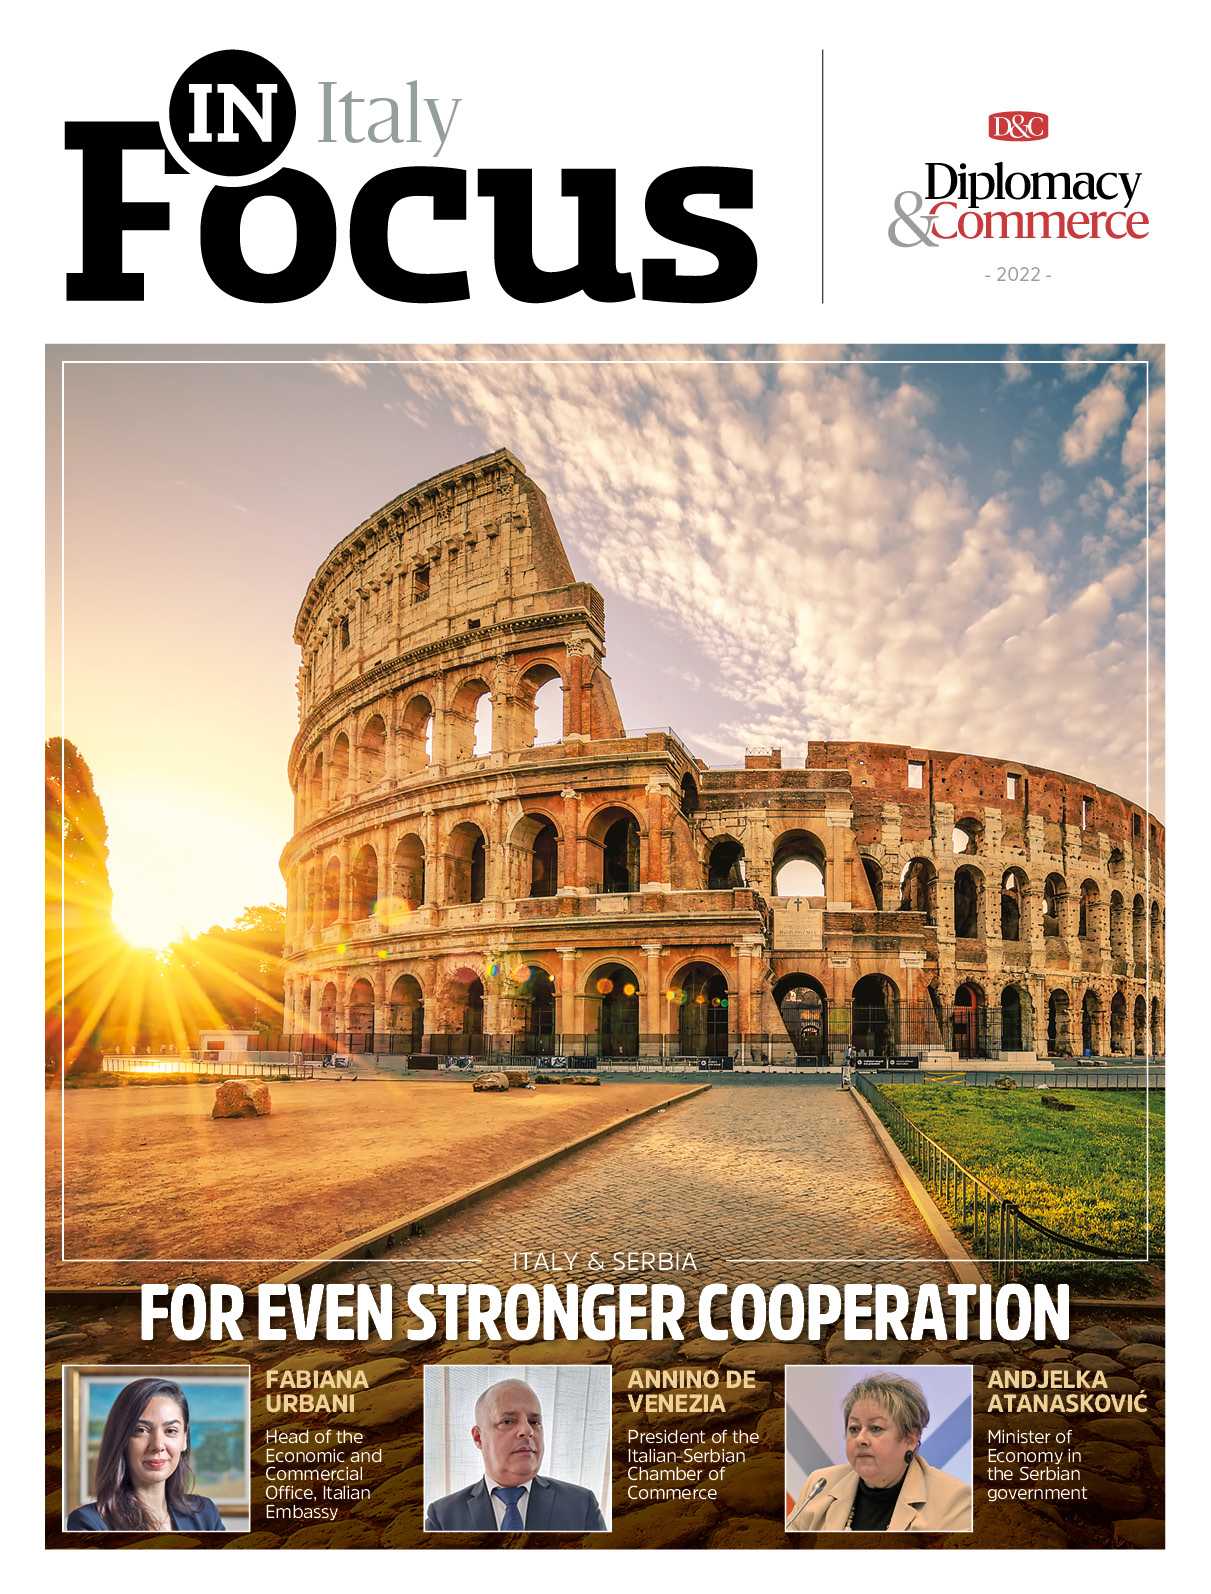 DandC - diplomacyandcommerce - In Focus - Italy 2022